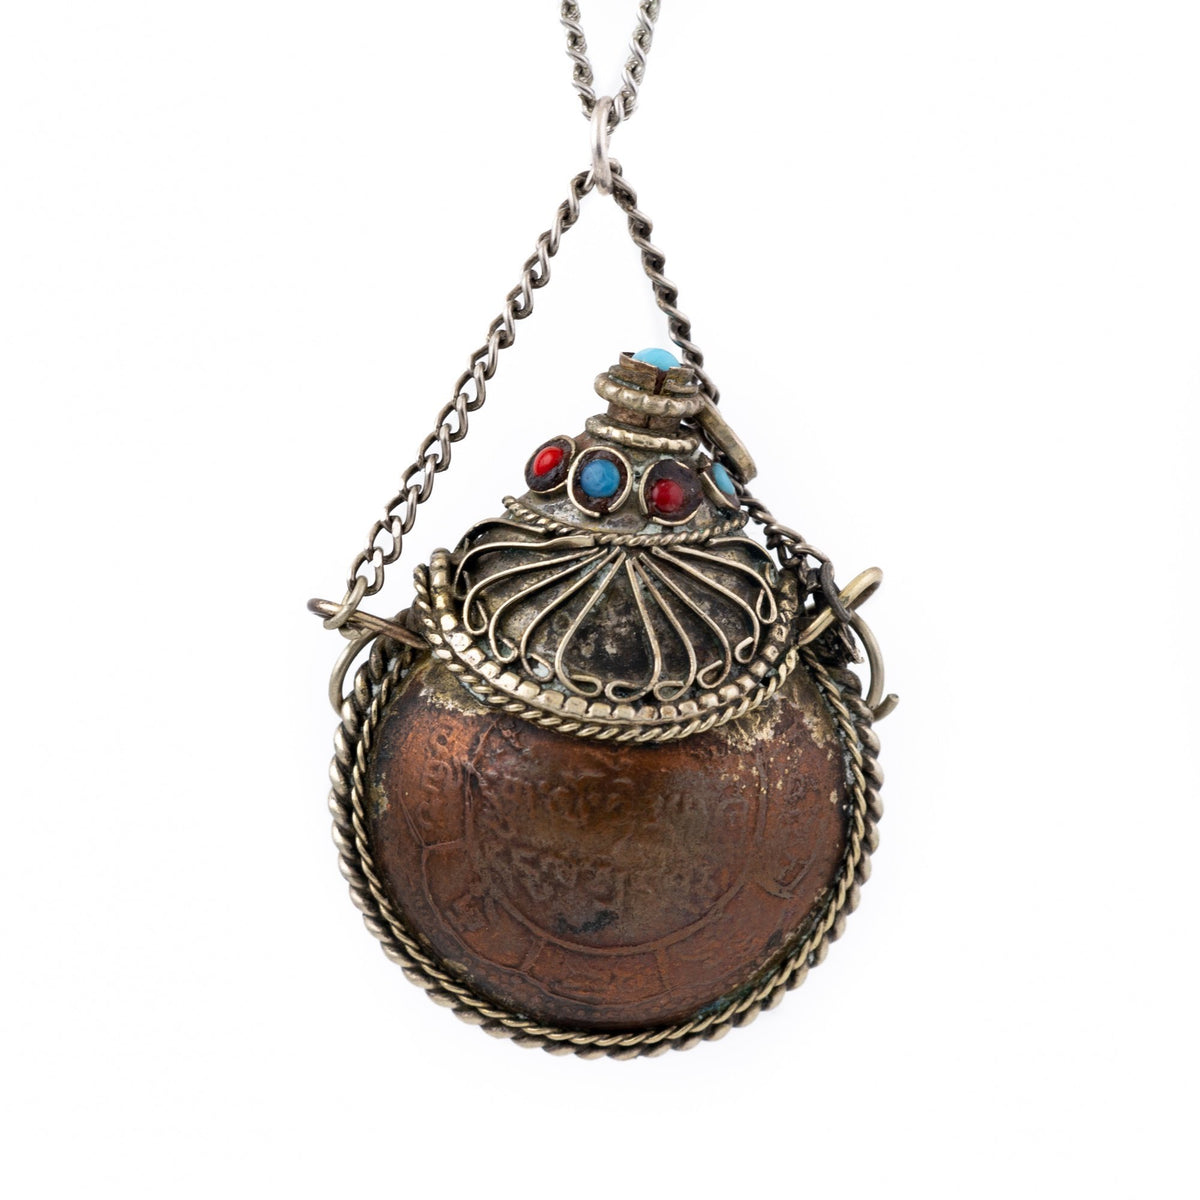 Antique Tribal Bottle Necklace - Kingdom Jewelry